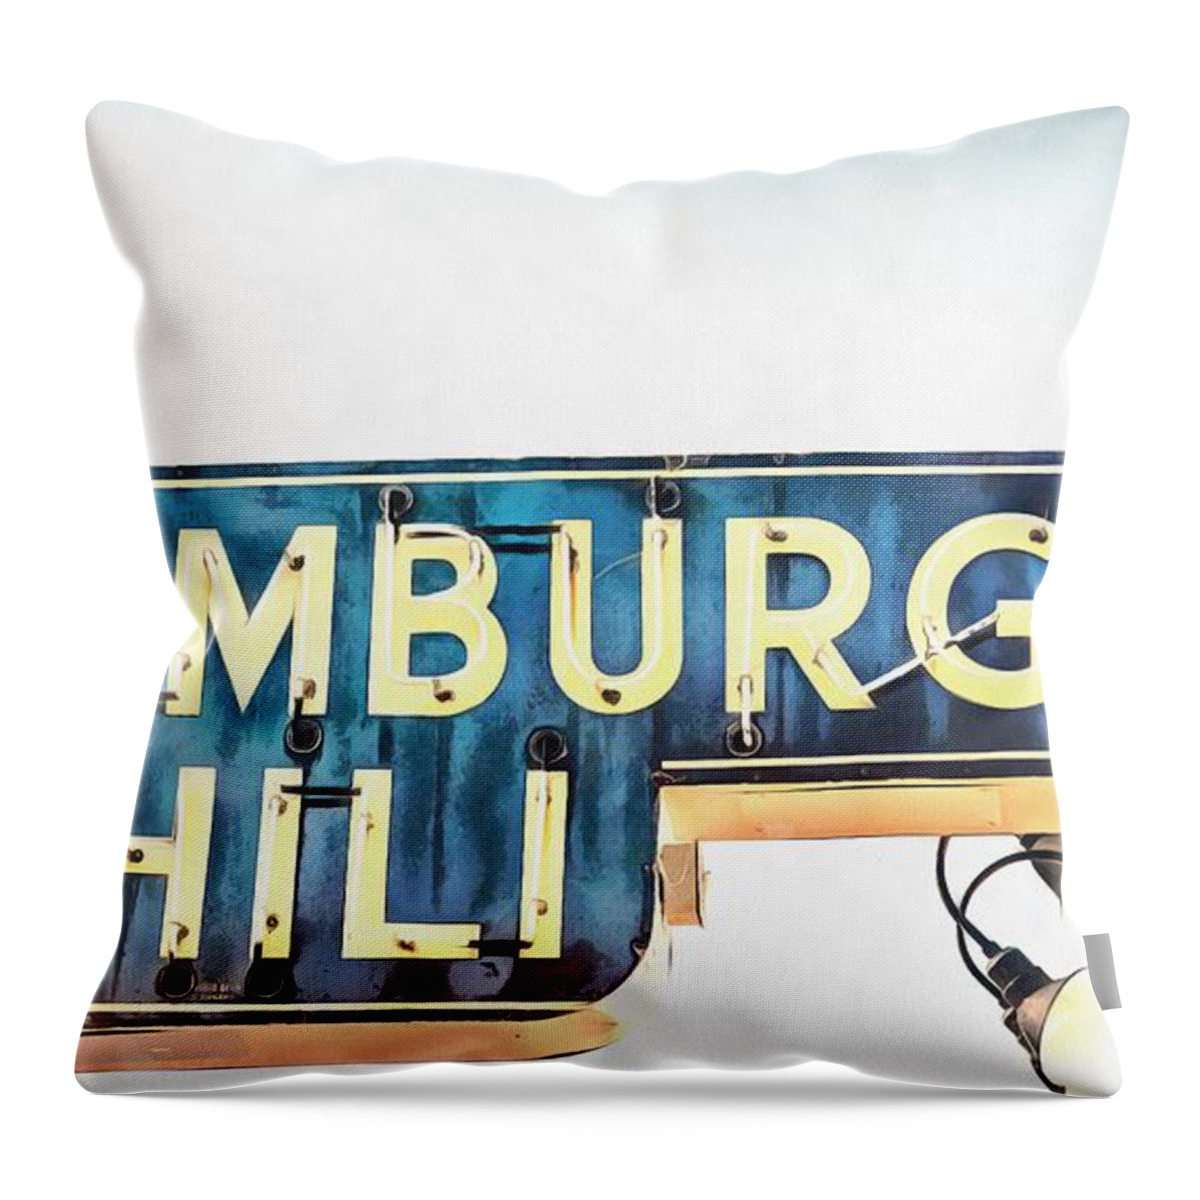 Hamburger Throw Pillow featuring the digital art Hamburger Chili Chicago by Edward Fielding